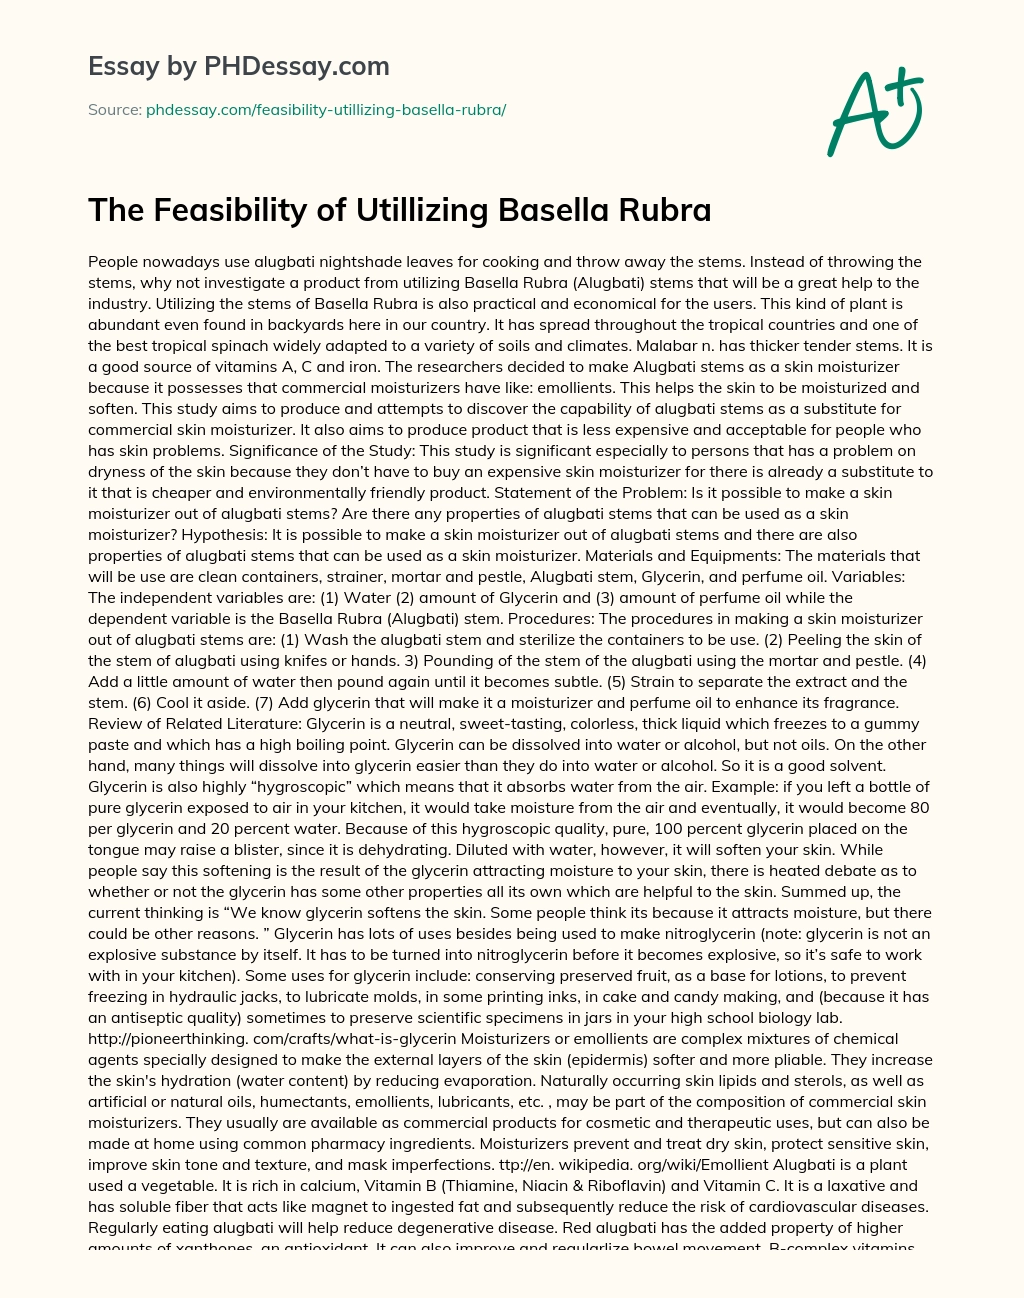 The Feasibility of Utillizing Basella Rubra essay